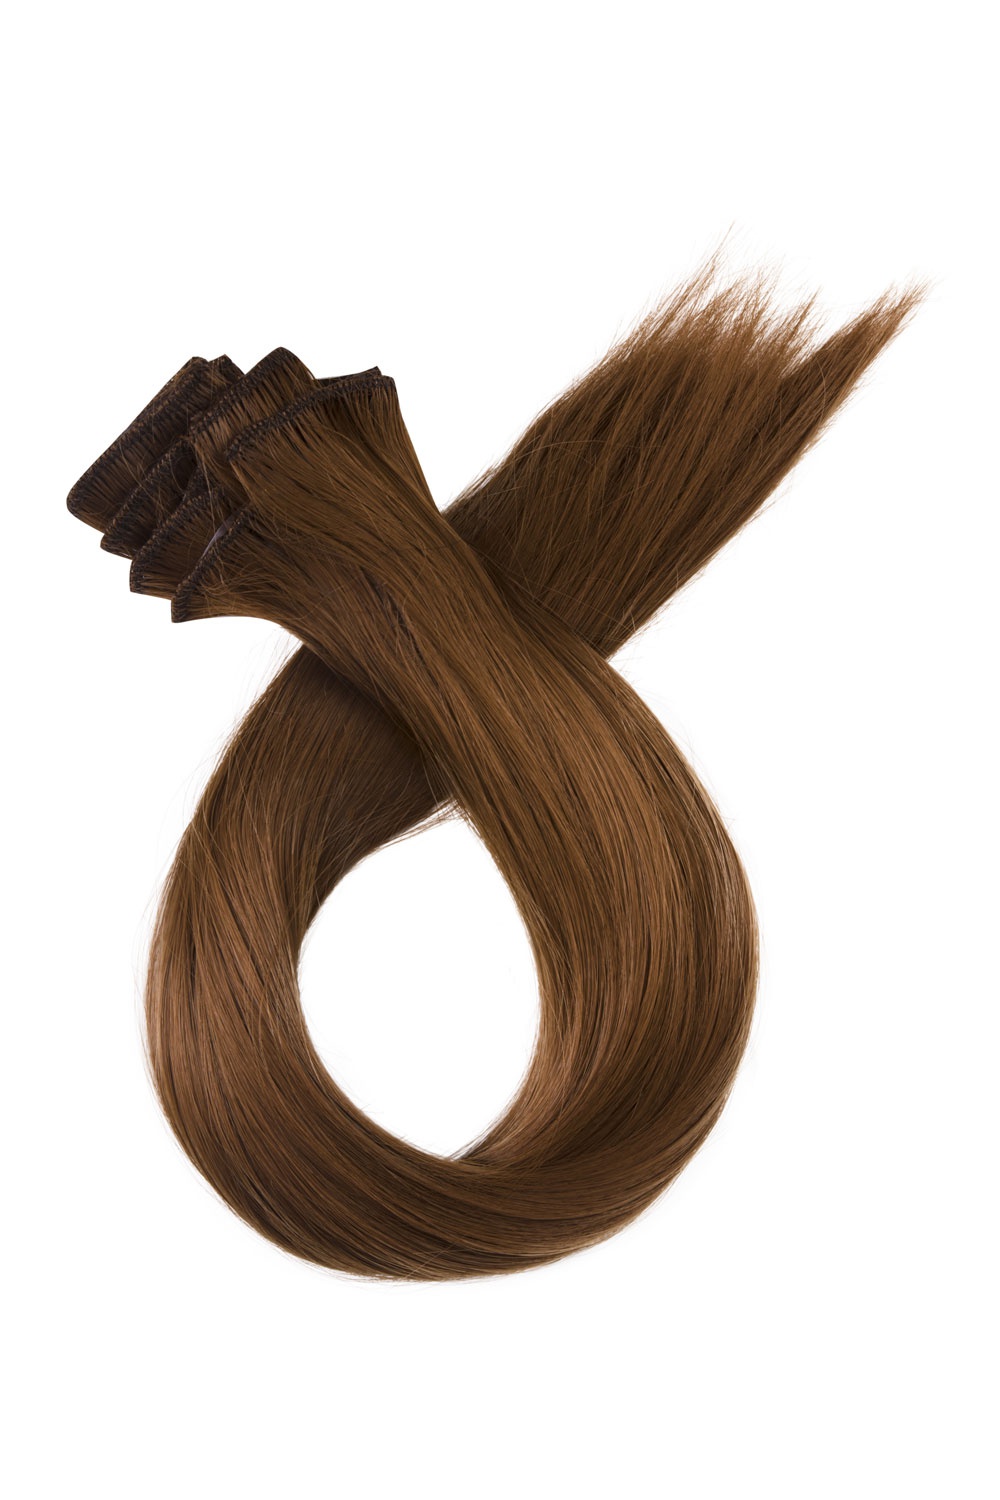 Svetlo hnedé clip in vlasy, 50cm, 150g, farba 12